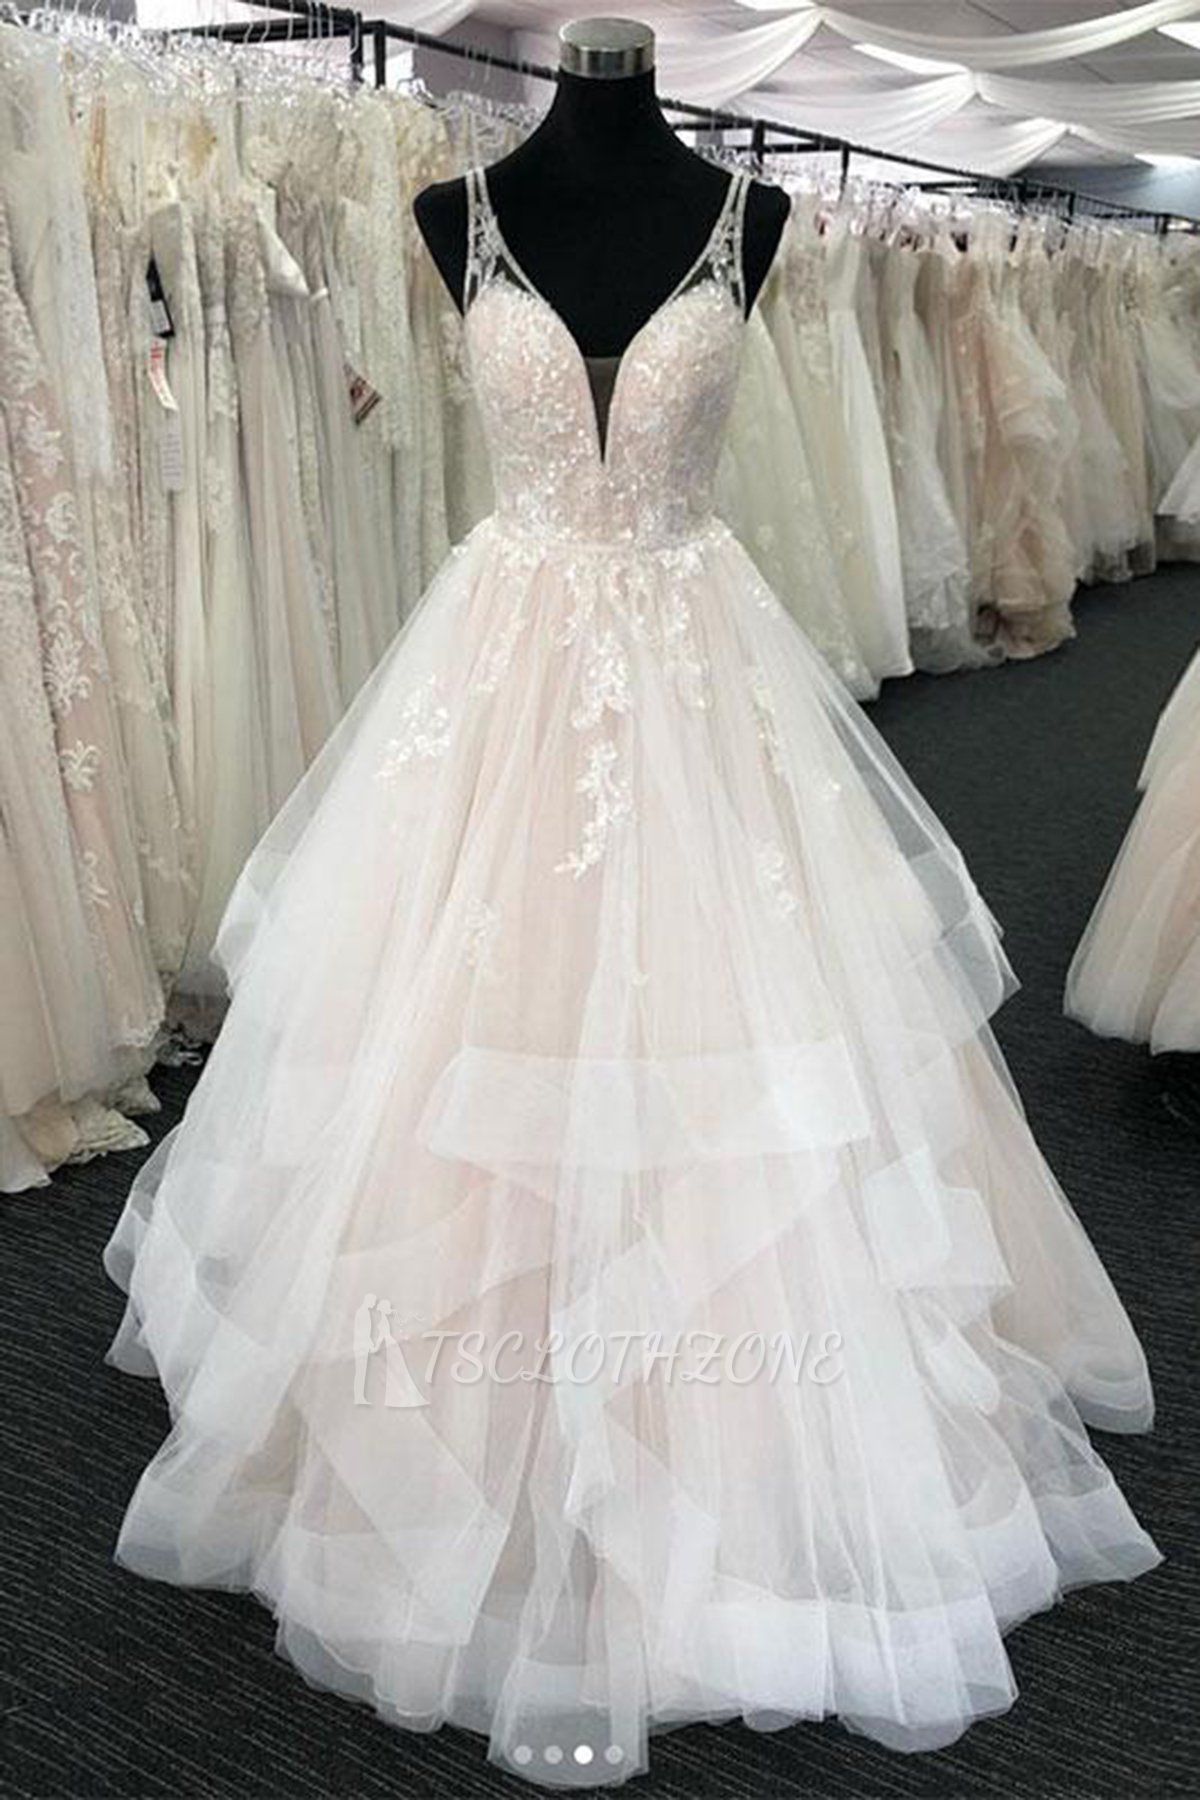 TsClothzone Elegant Tulle V-Neck Wedding Dress Open Back Long Layered Bridal Gowns On Sale